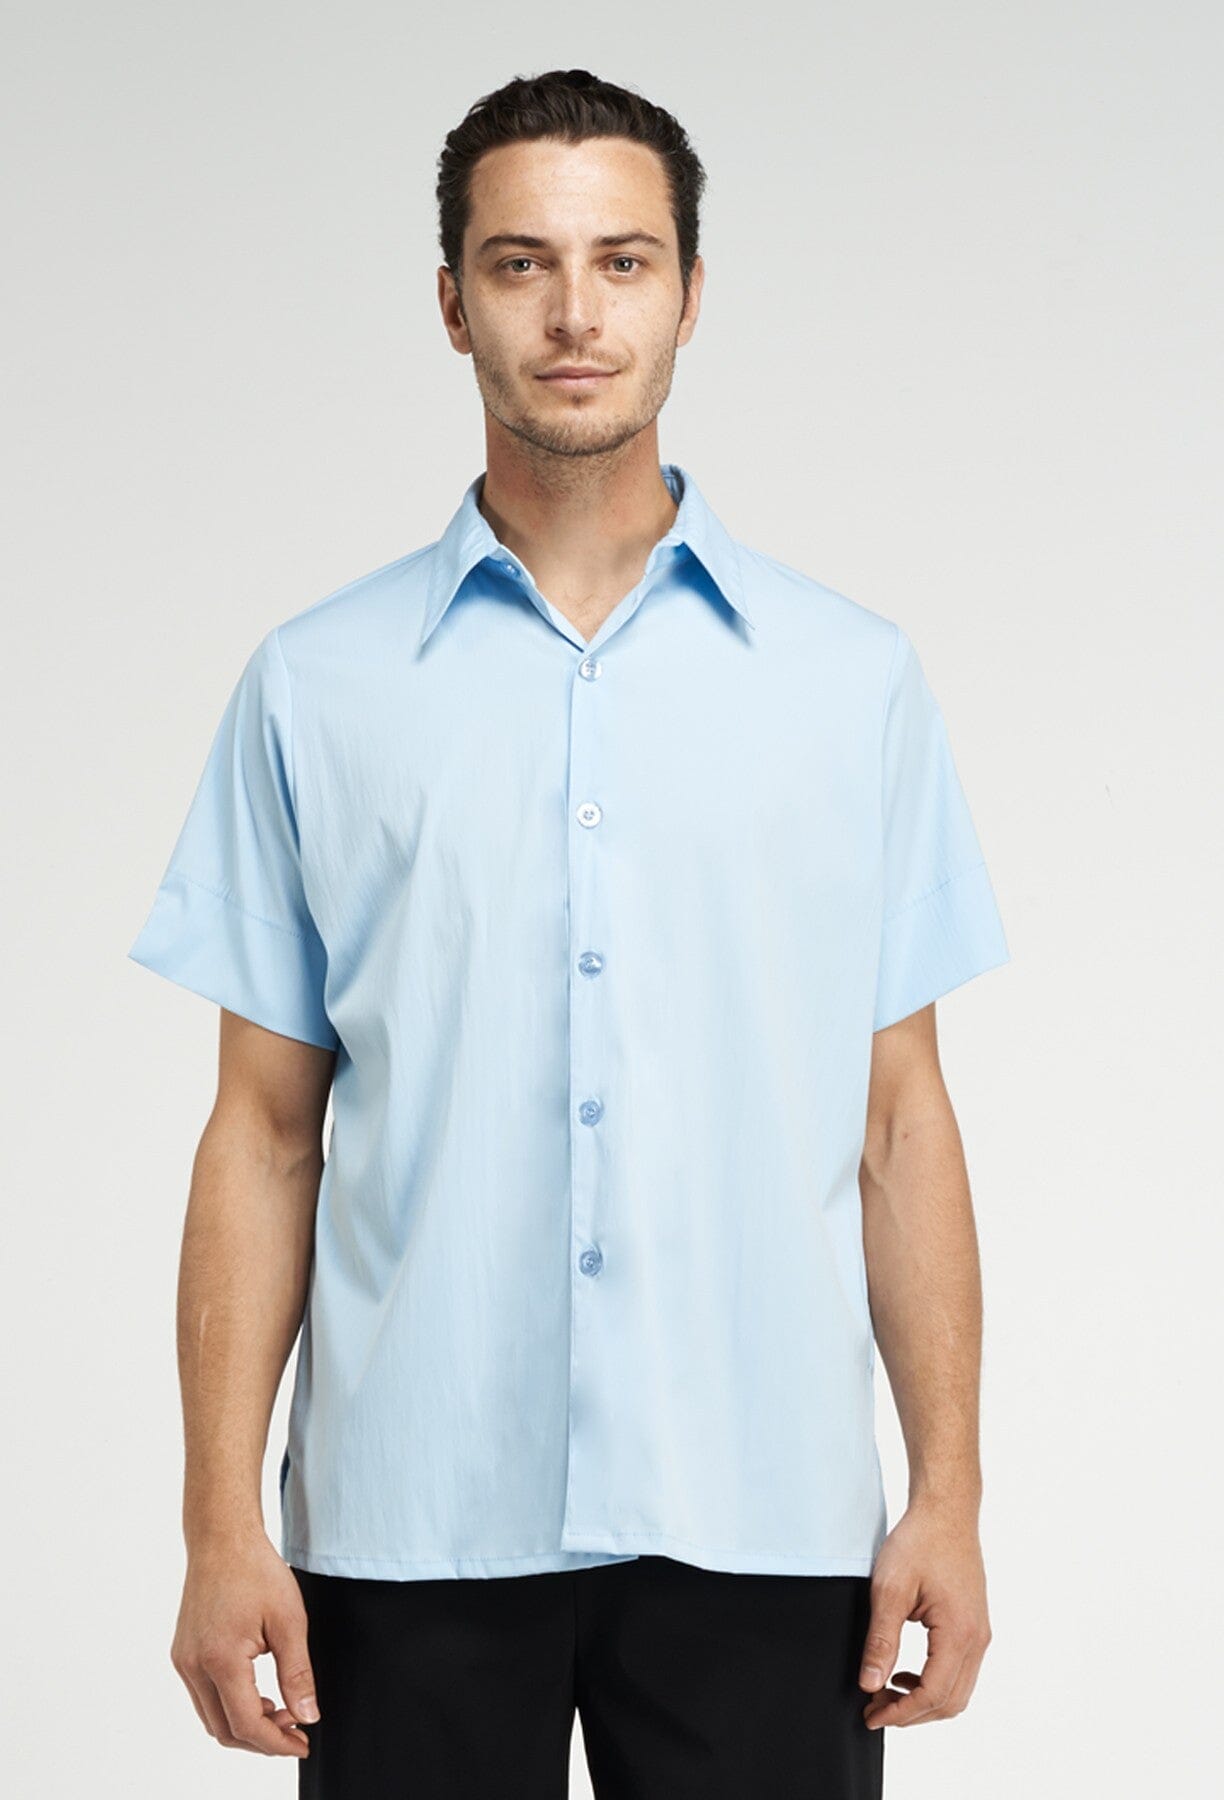 Unisex Shirt Collar